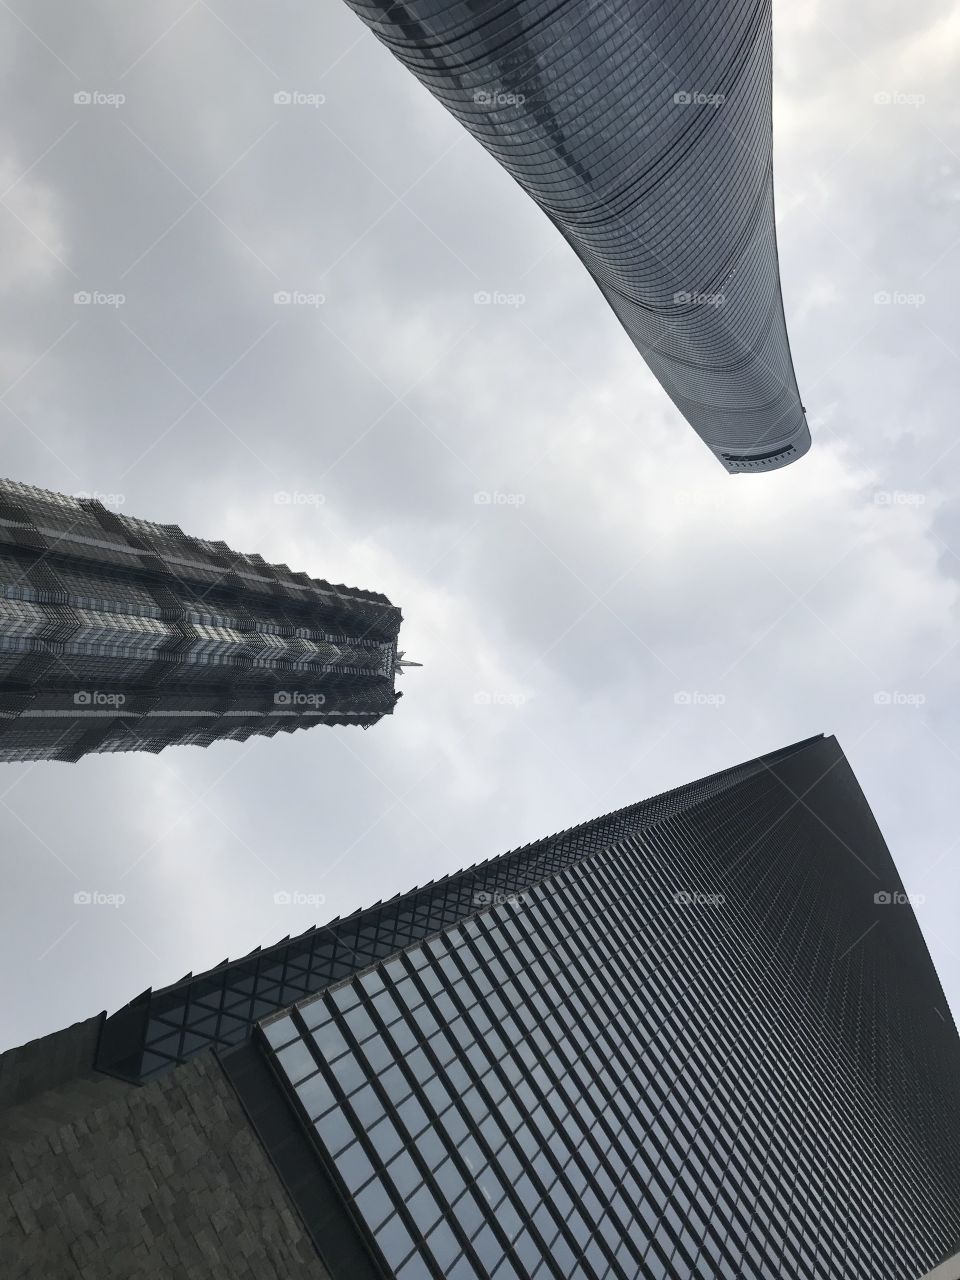 Shanghai building 